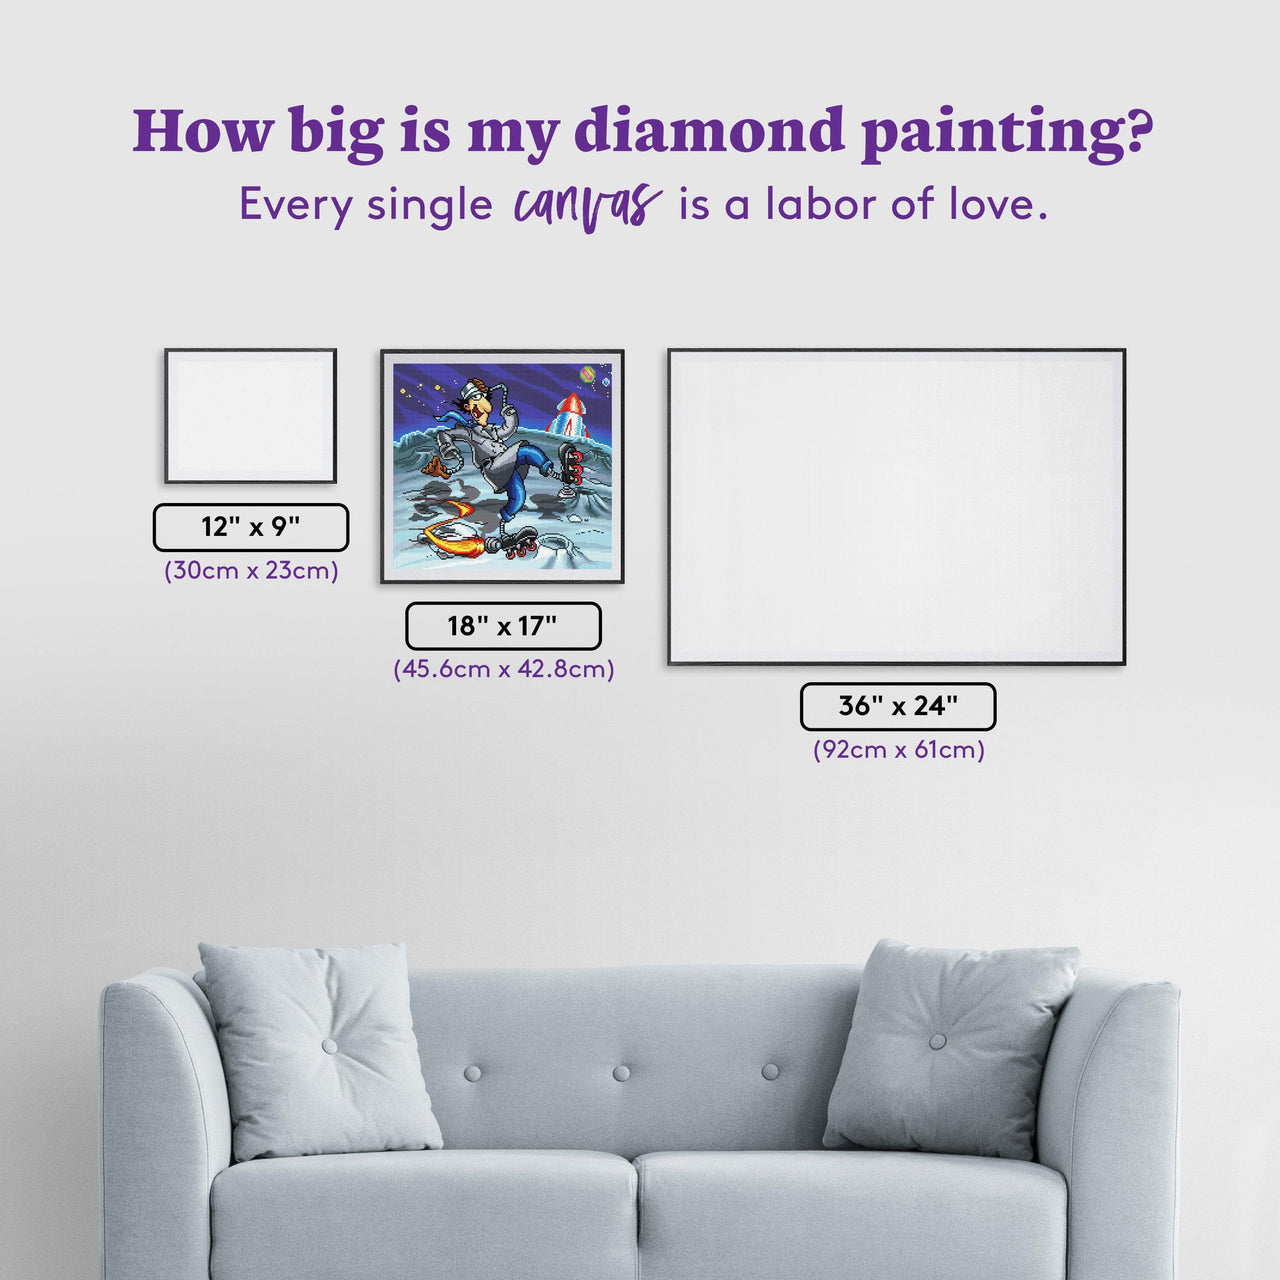 Diamond Painting Go-Go-Gadget Rocket 18" x 17" (45.6cm x 42.8cm) / Square with 50 Colors including 2 AB Diamonds and 2 Fairy Dust Diamonds / 31,476